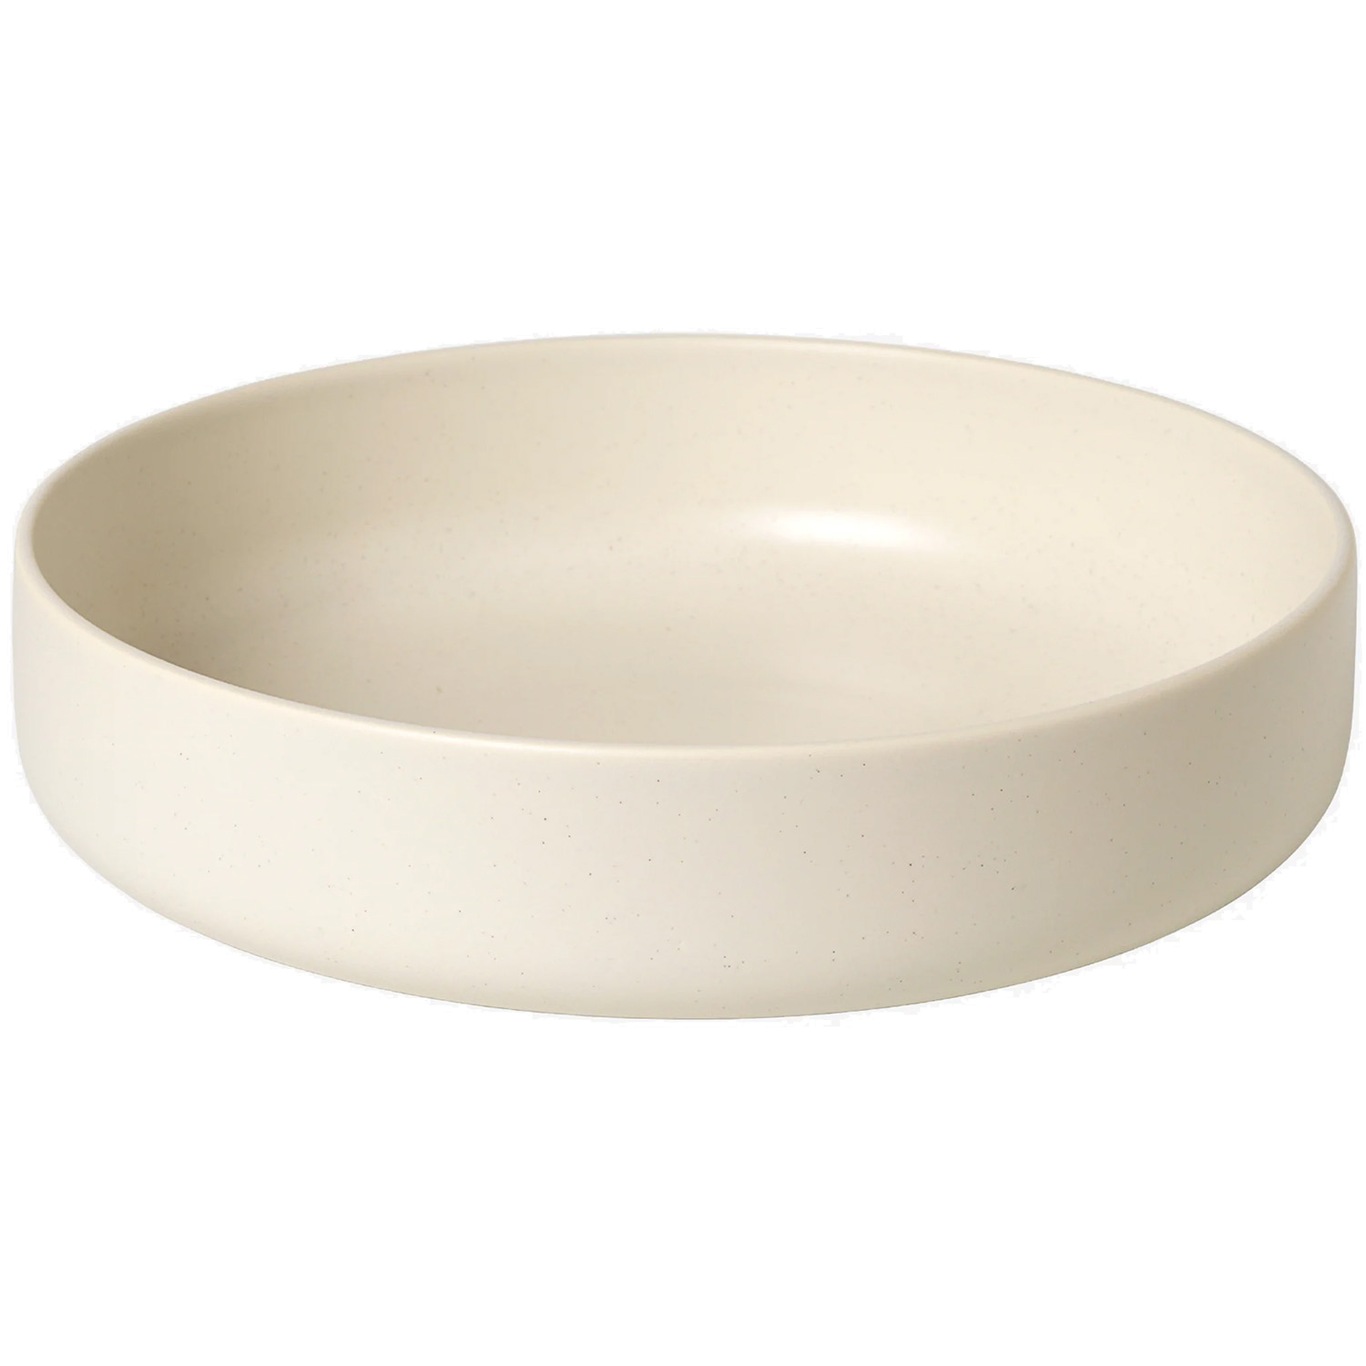 Ceramic Pisu Tarjotin Ø30 cm, Vanilla White